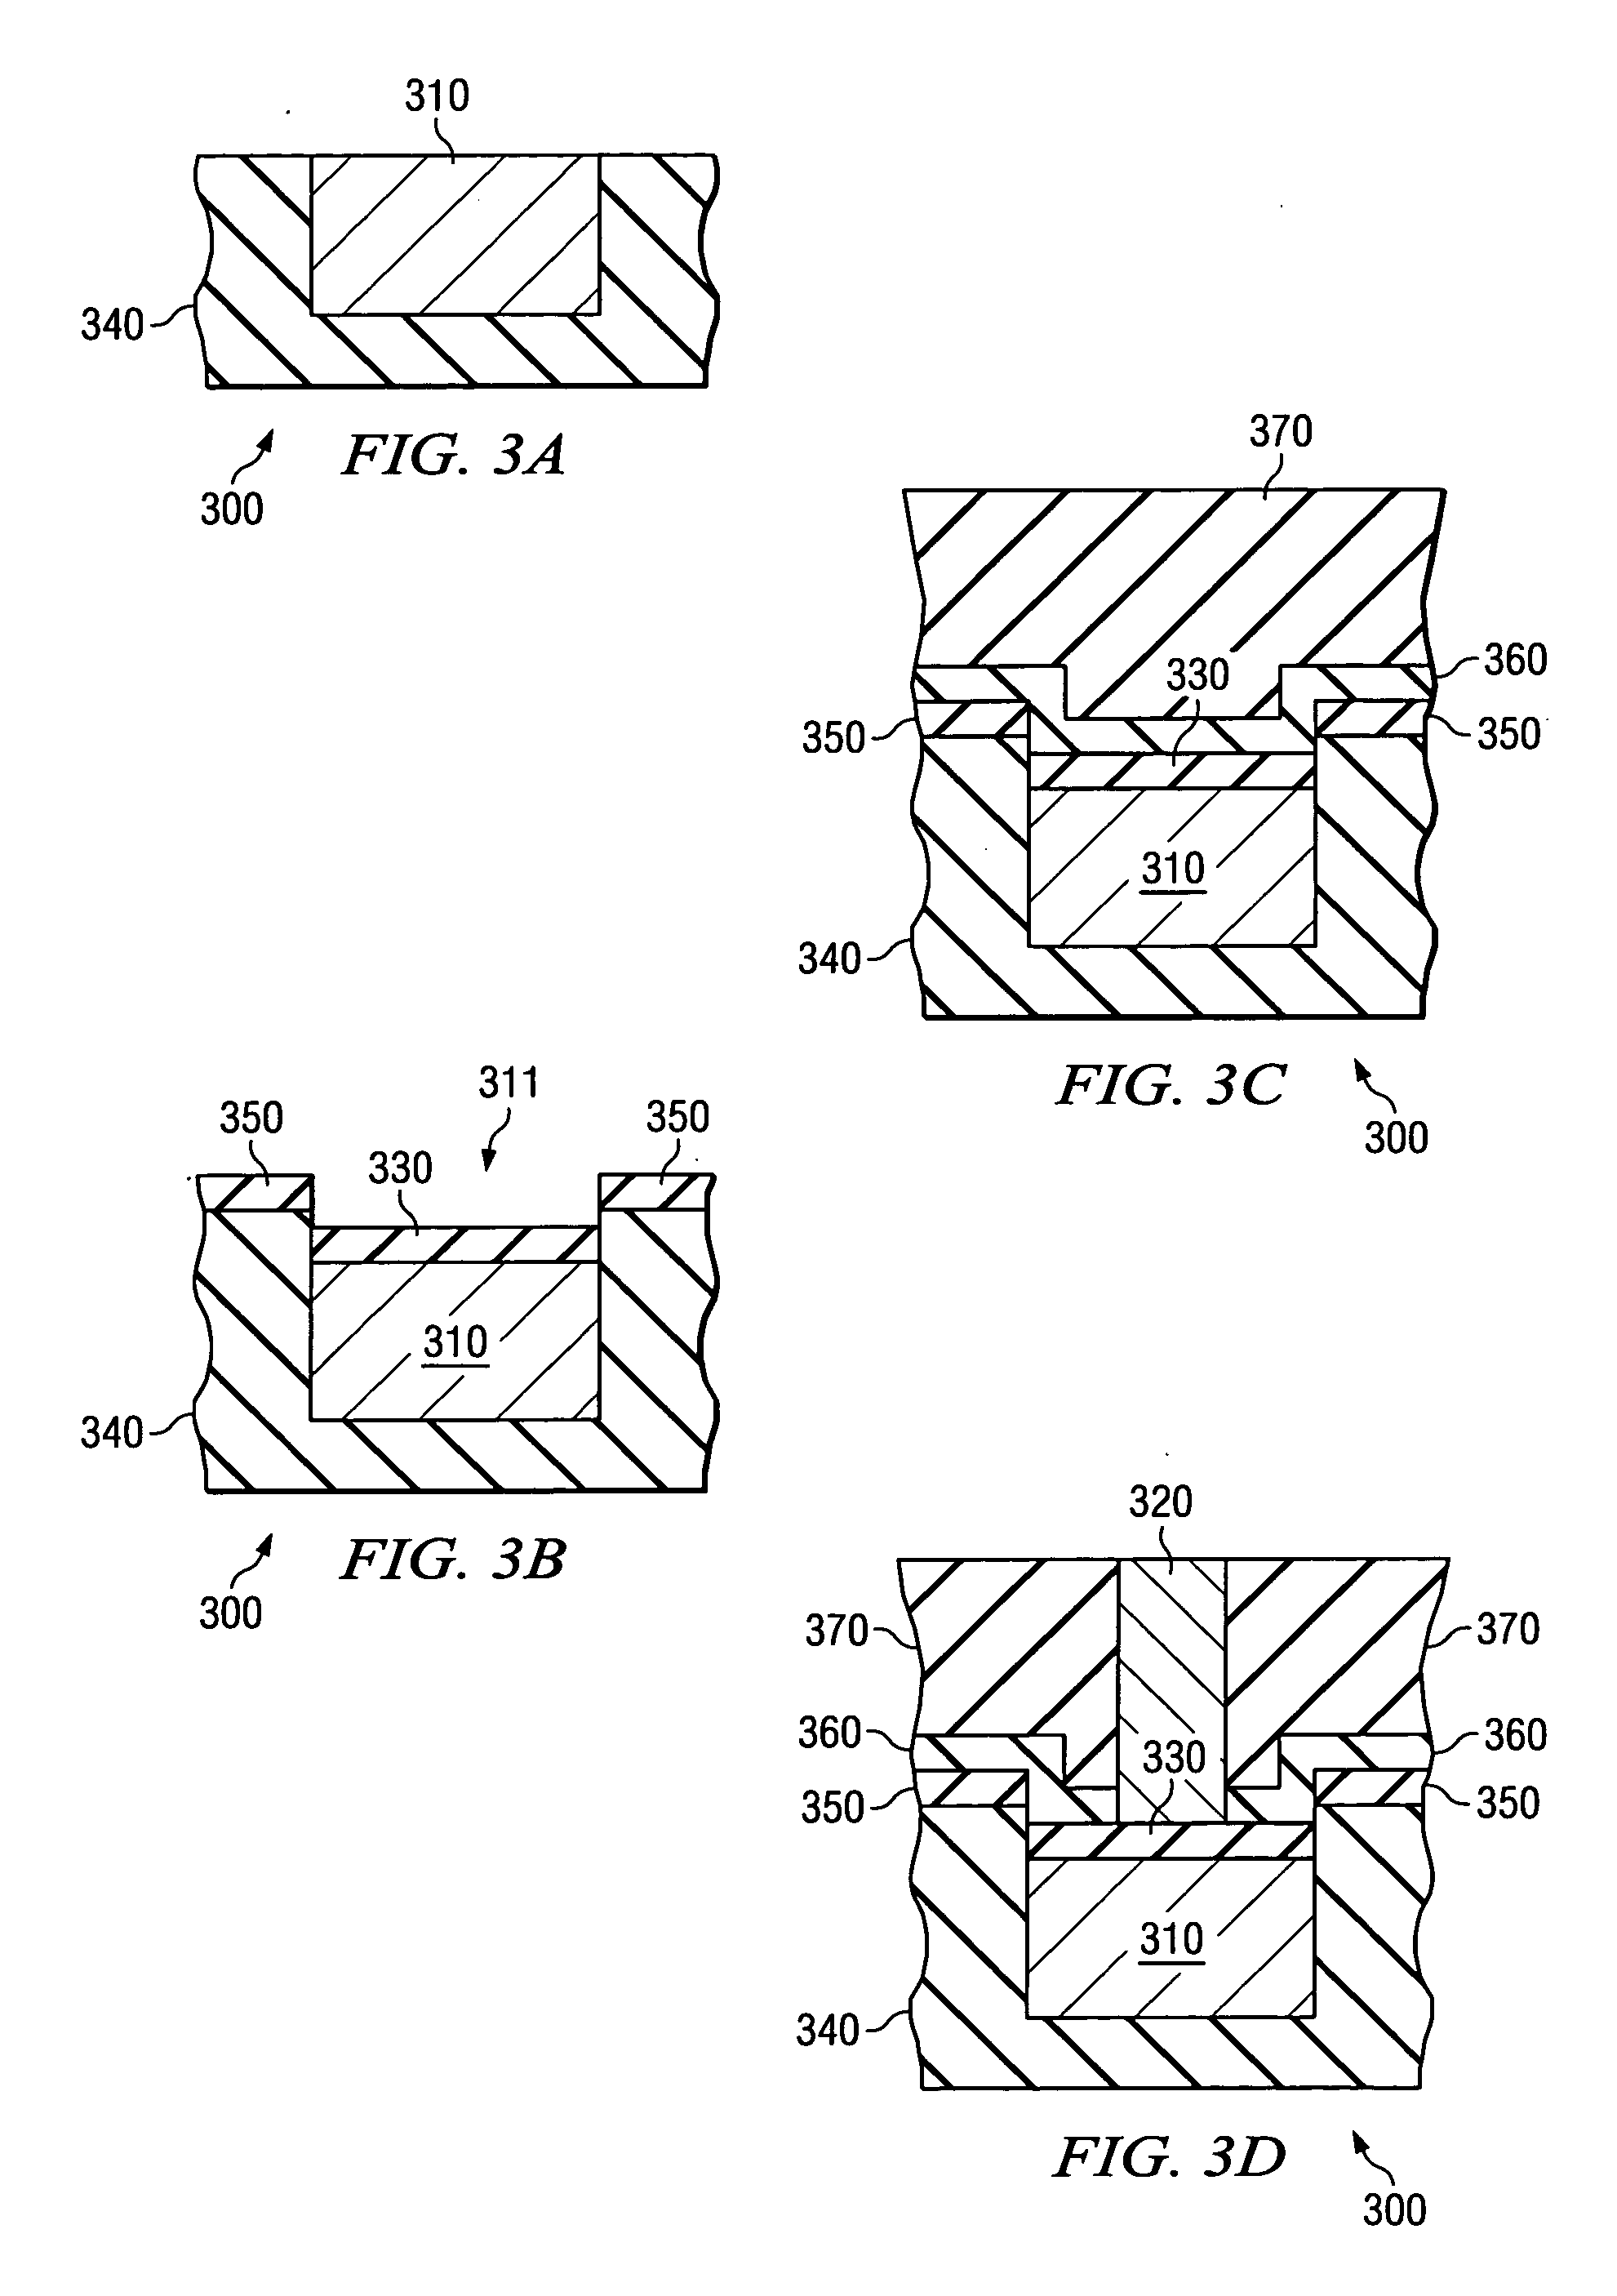 Single lithography-step planar metal-insulator-metal capacitor and resistor